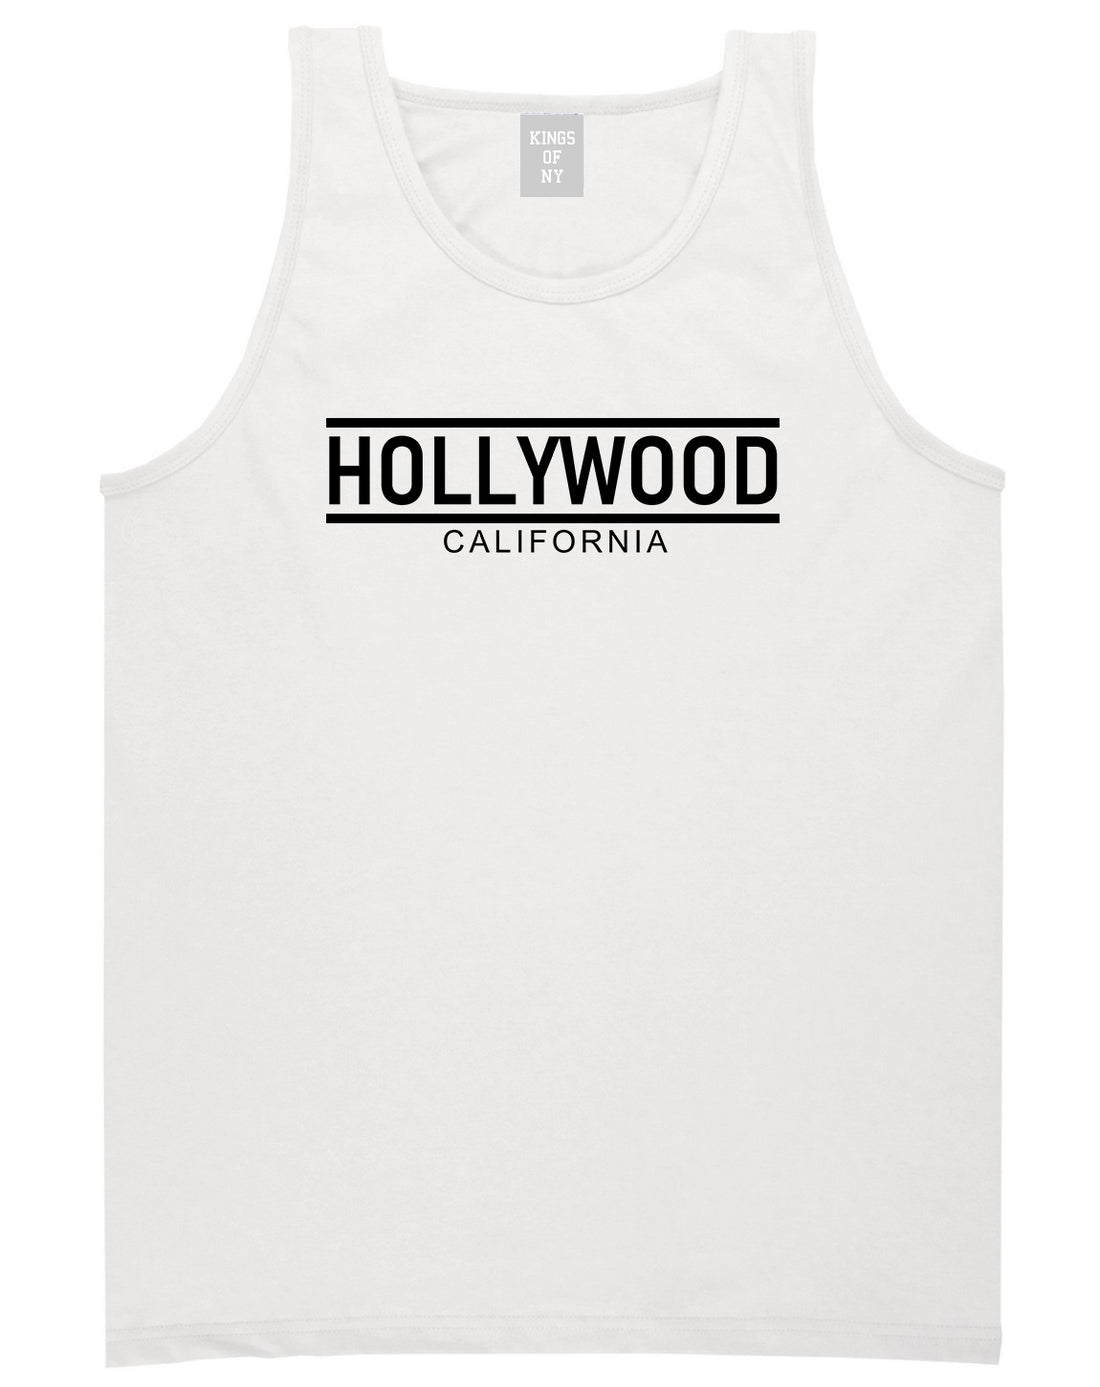 Hollywood California City Lines Mens Tank Top T-Shirt White